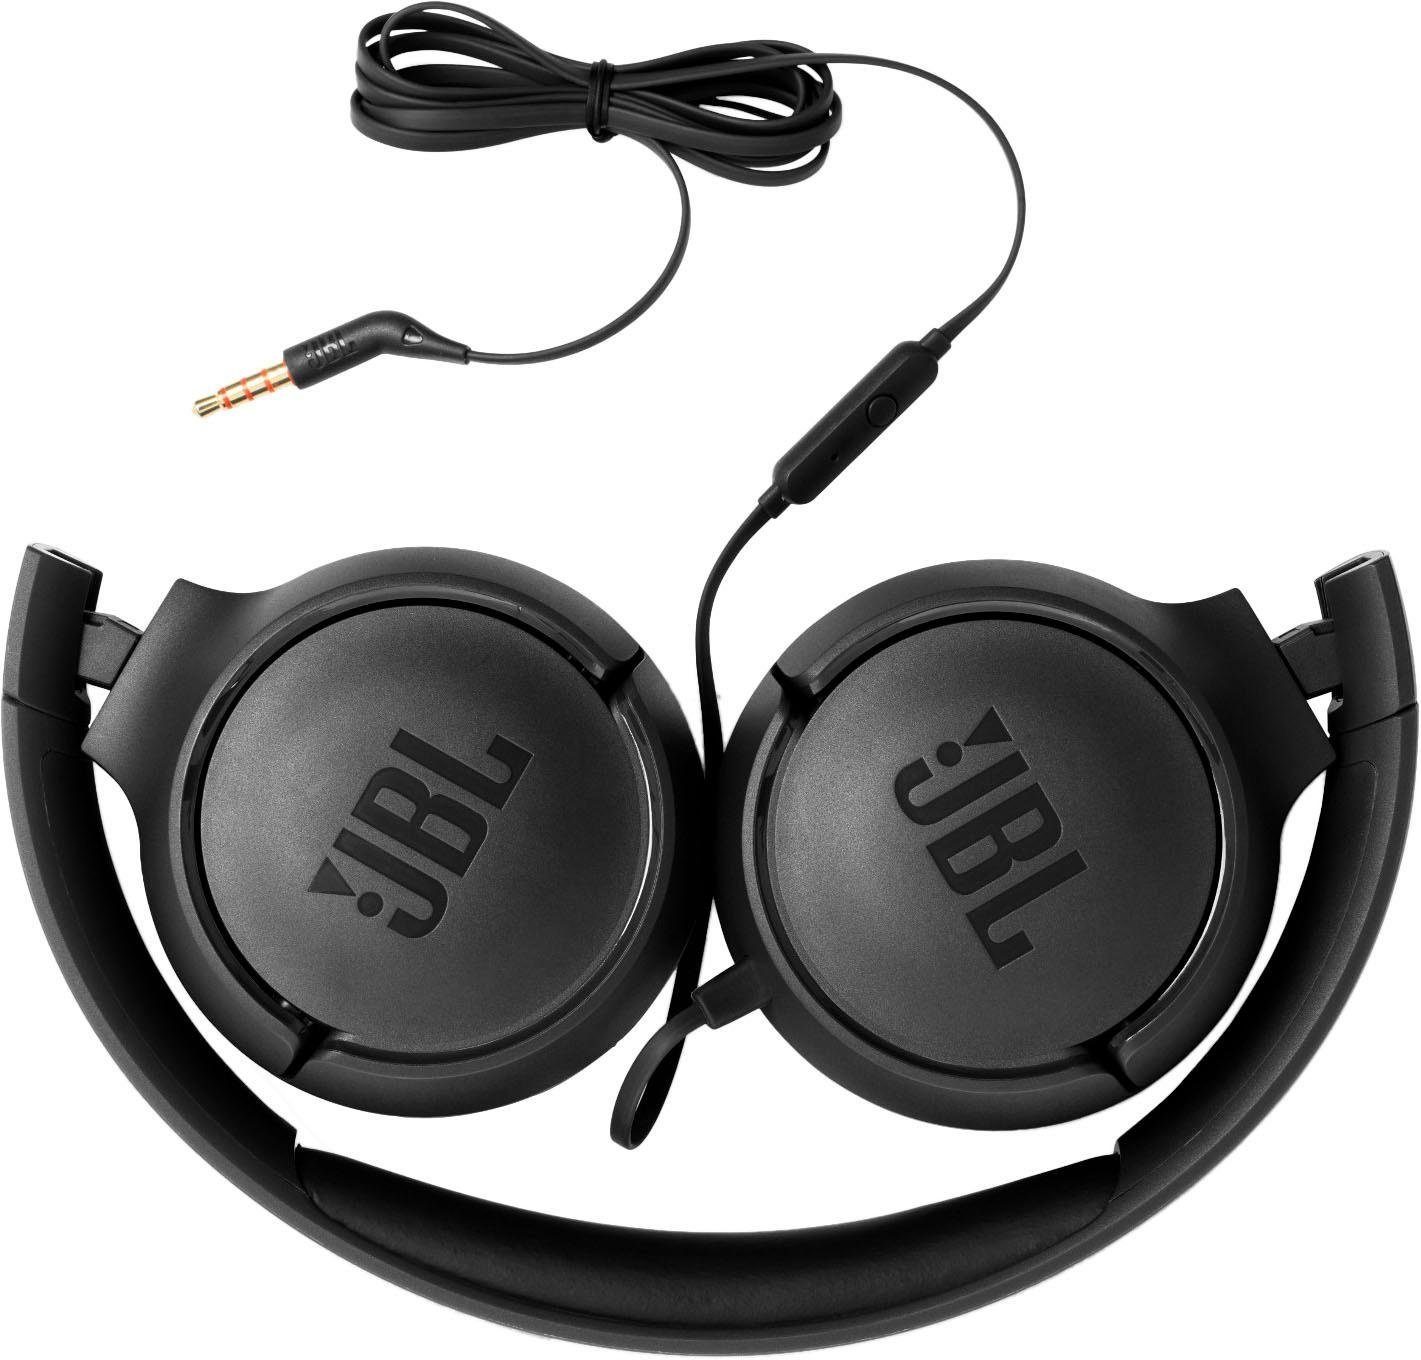 Assistant, TUNE schwarz On-Ear-Kopfhörer 500 (Sprachsteuerung, JBL Google Siri)